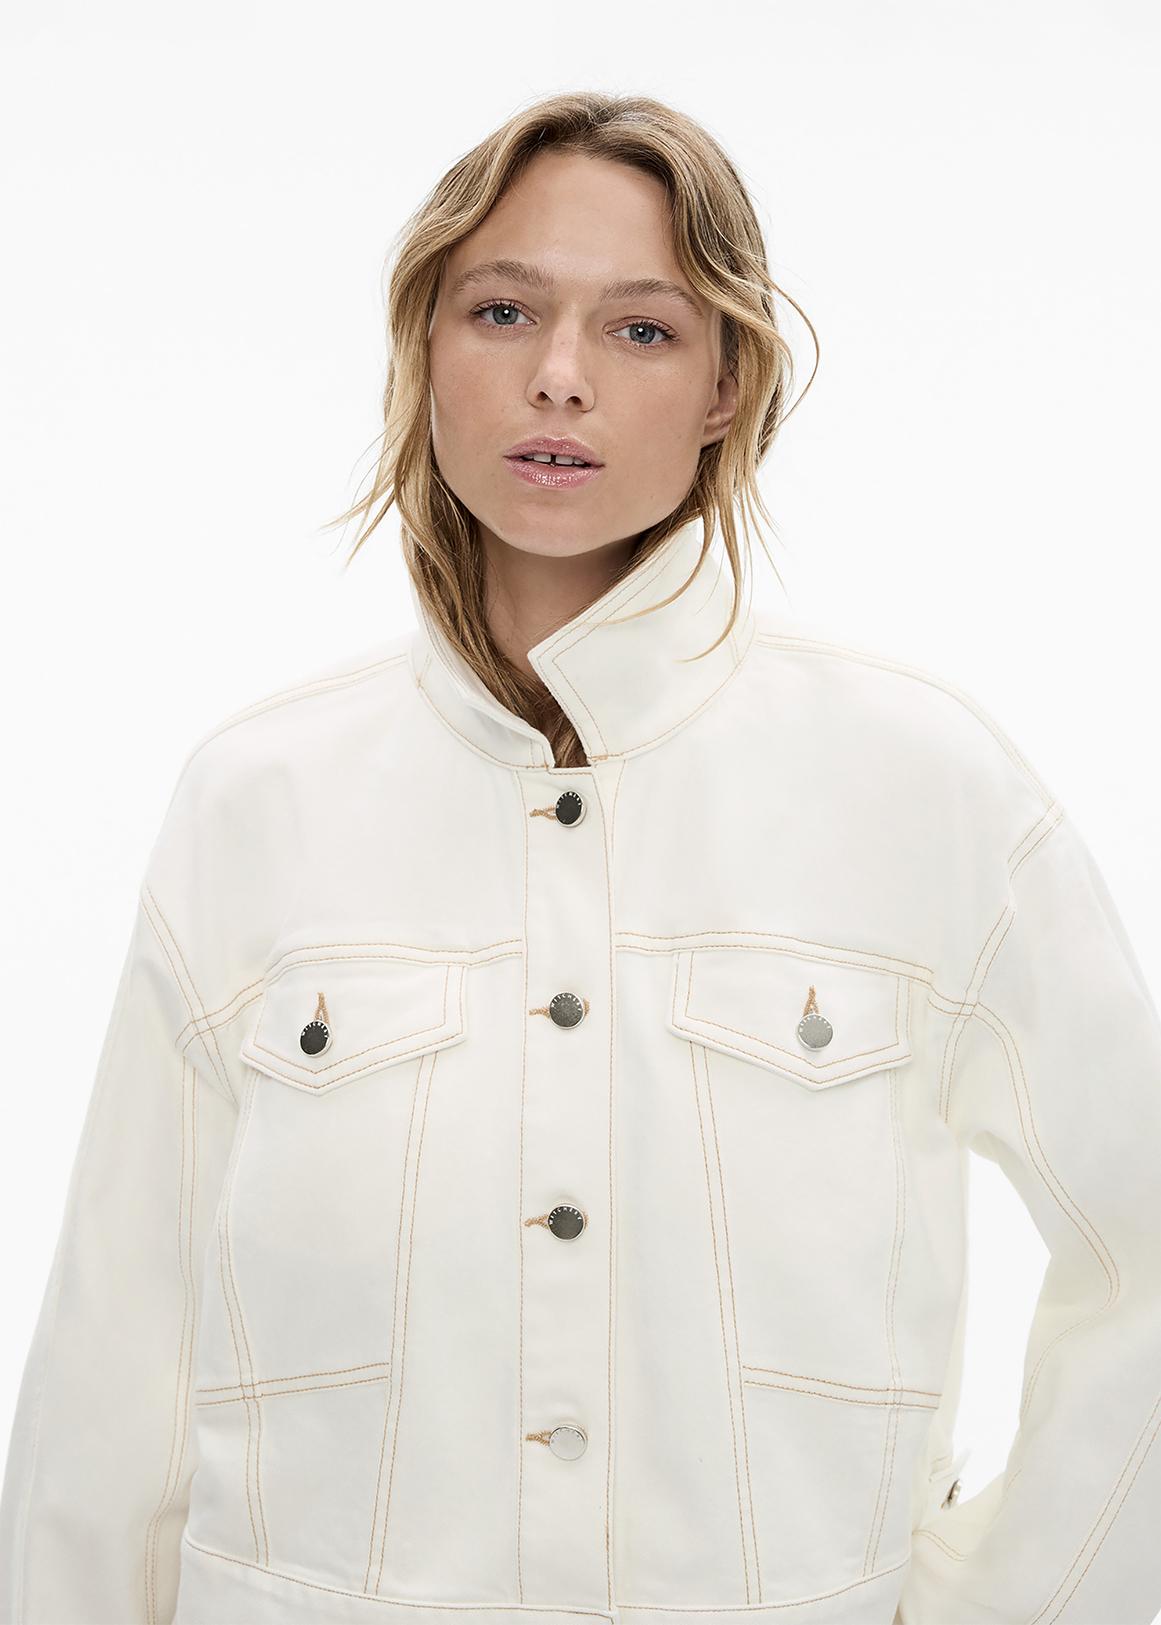 Chalk French Linen Seam Detail Blouse - Women's Linen Shirts